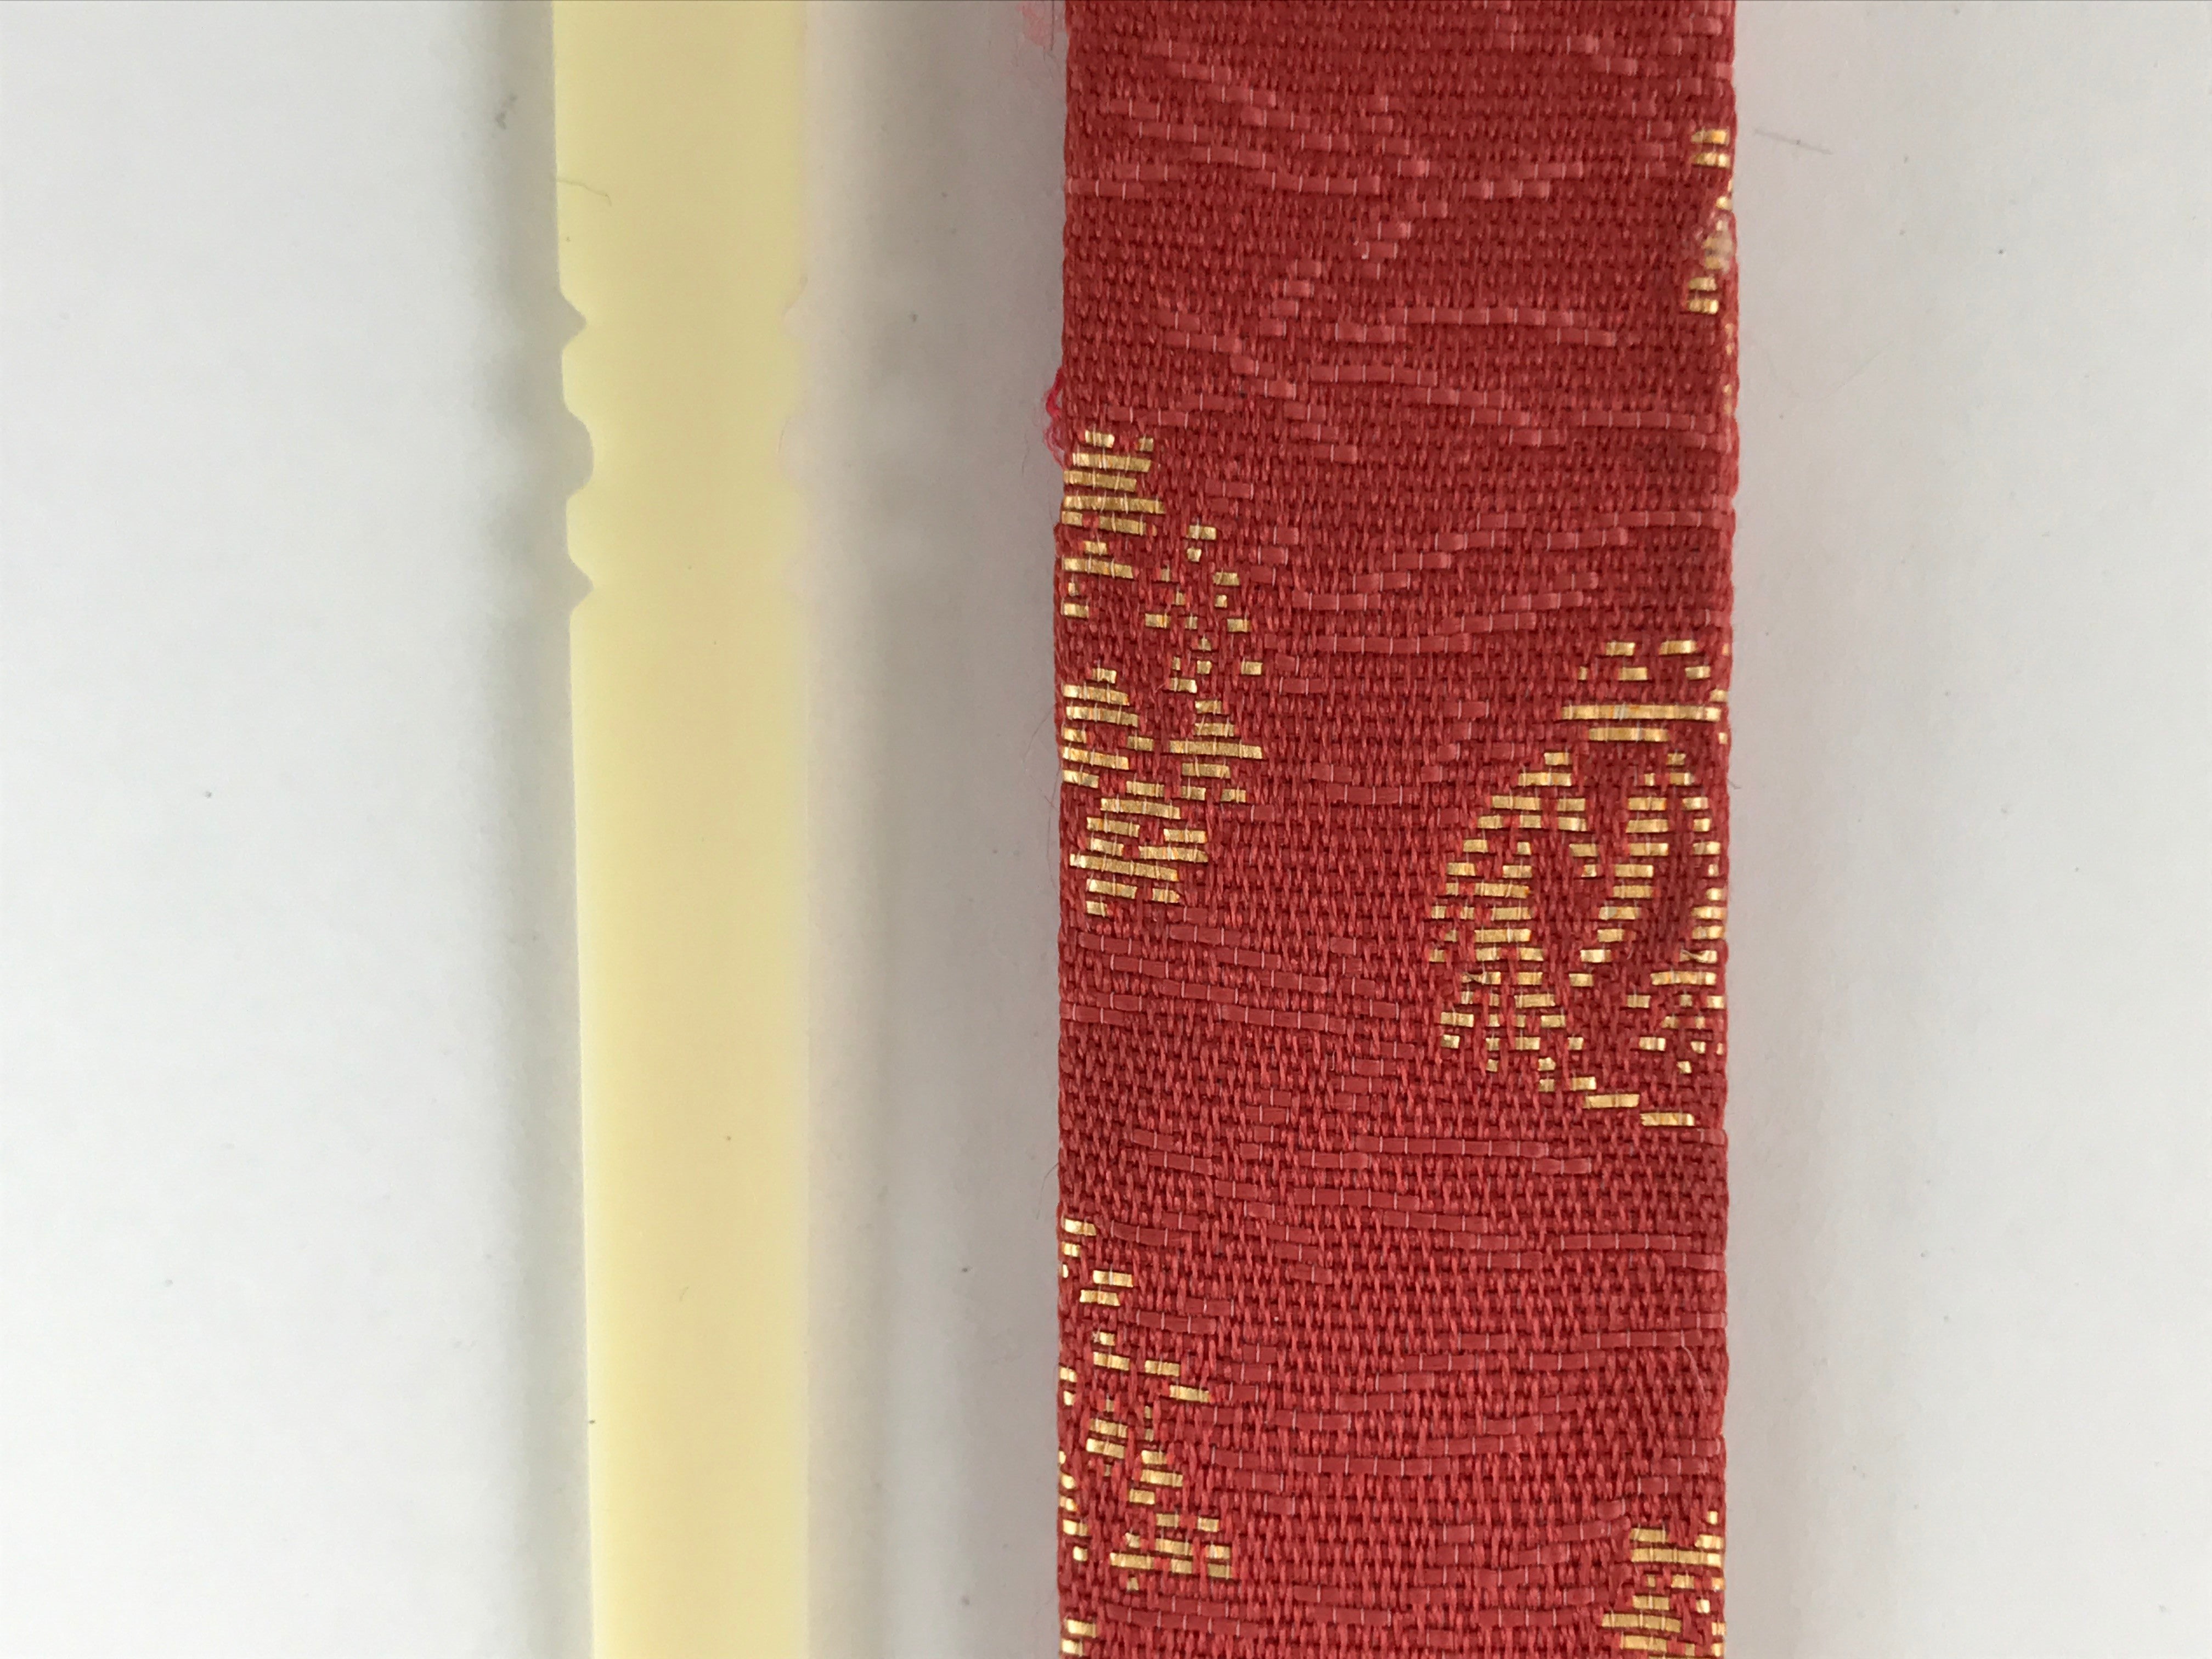 Japanese Kashikiri Yoji Toothpick Vtg Tea Ceremony Item Red Fabric Cover JK666